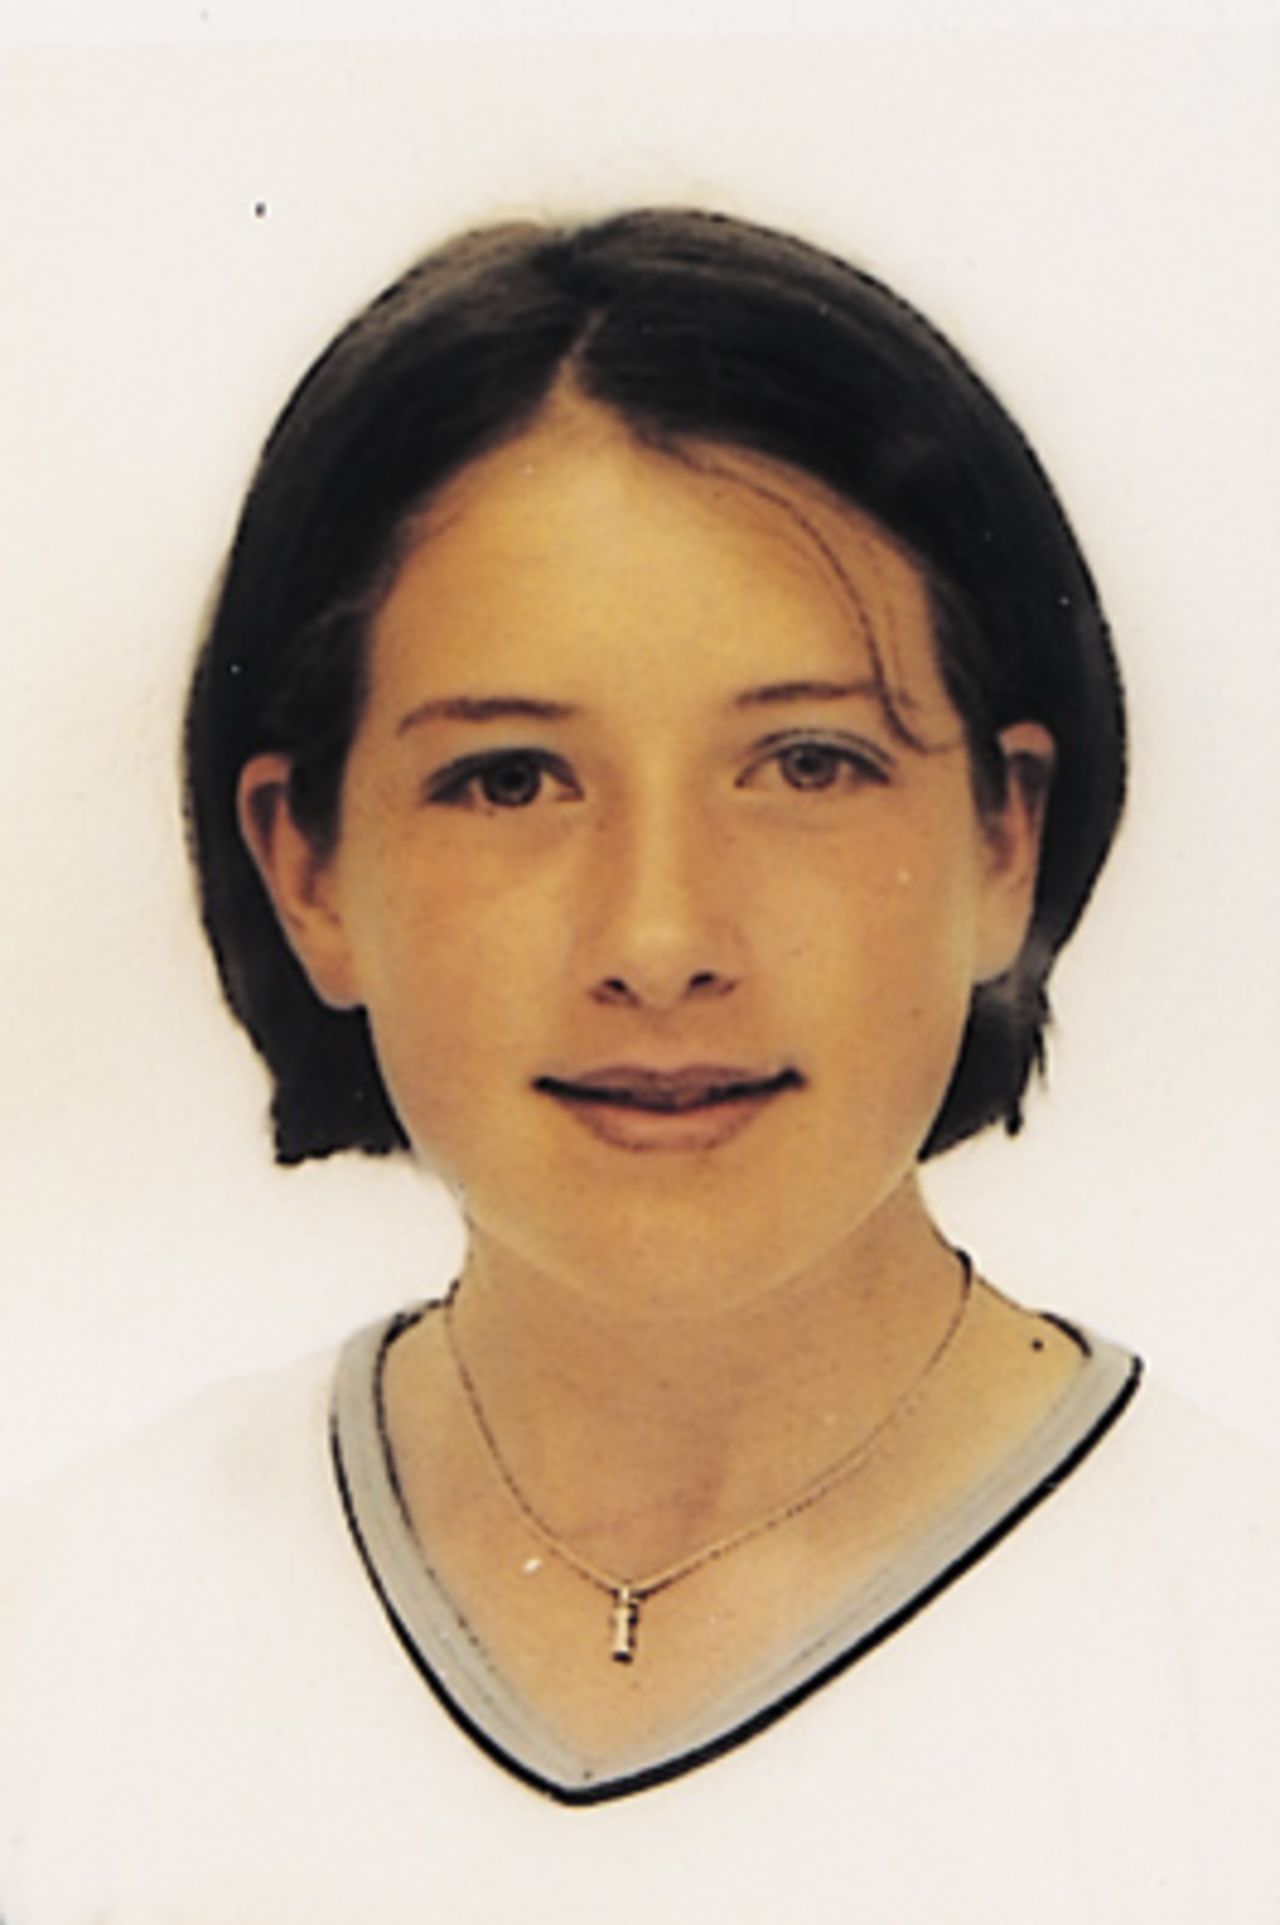 Portrait of Isobel Joyce - Ireland player in the CricInfo Women's World Cup 2000